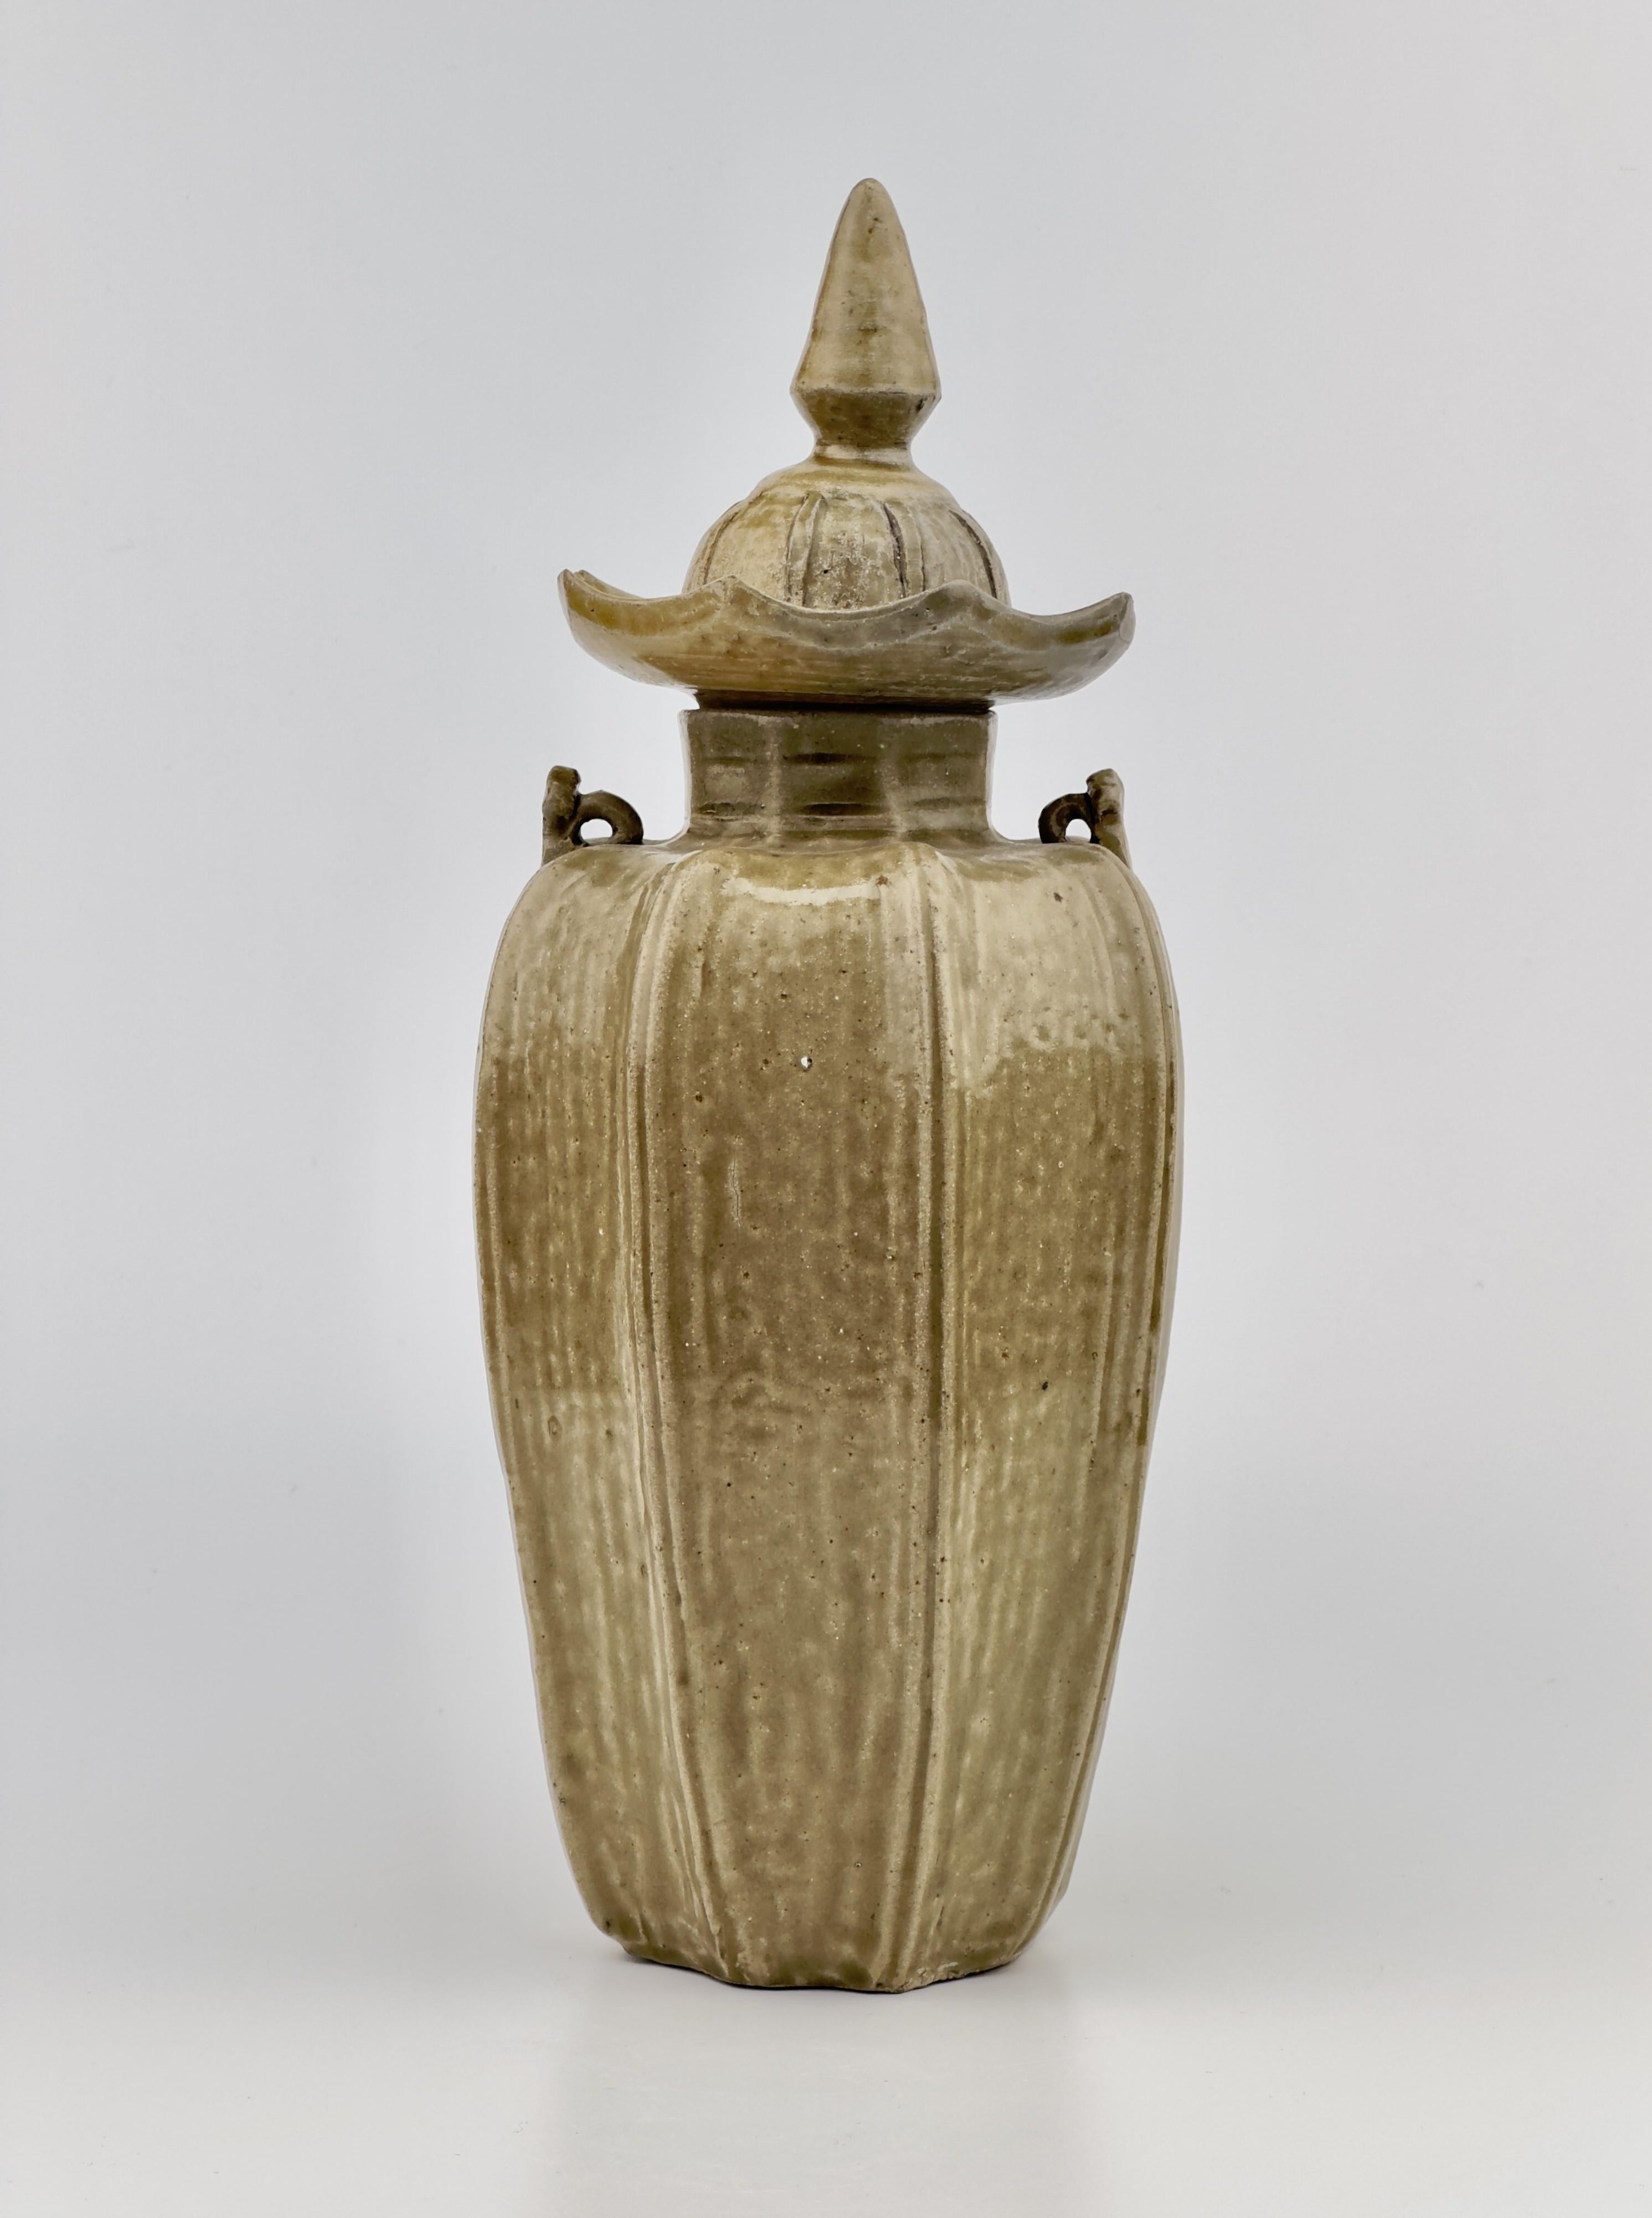 Han A Rare 'Yue' Celadon Glazed Octagonal Vase, Western Jin Dynasty (266 - 316 AD) For Sale